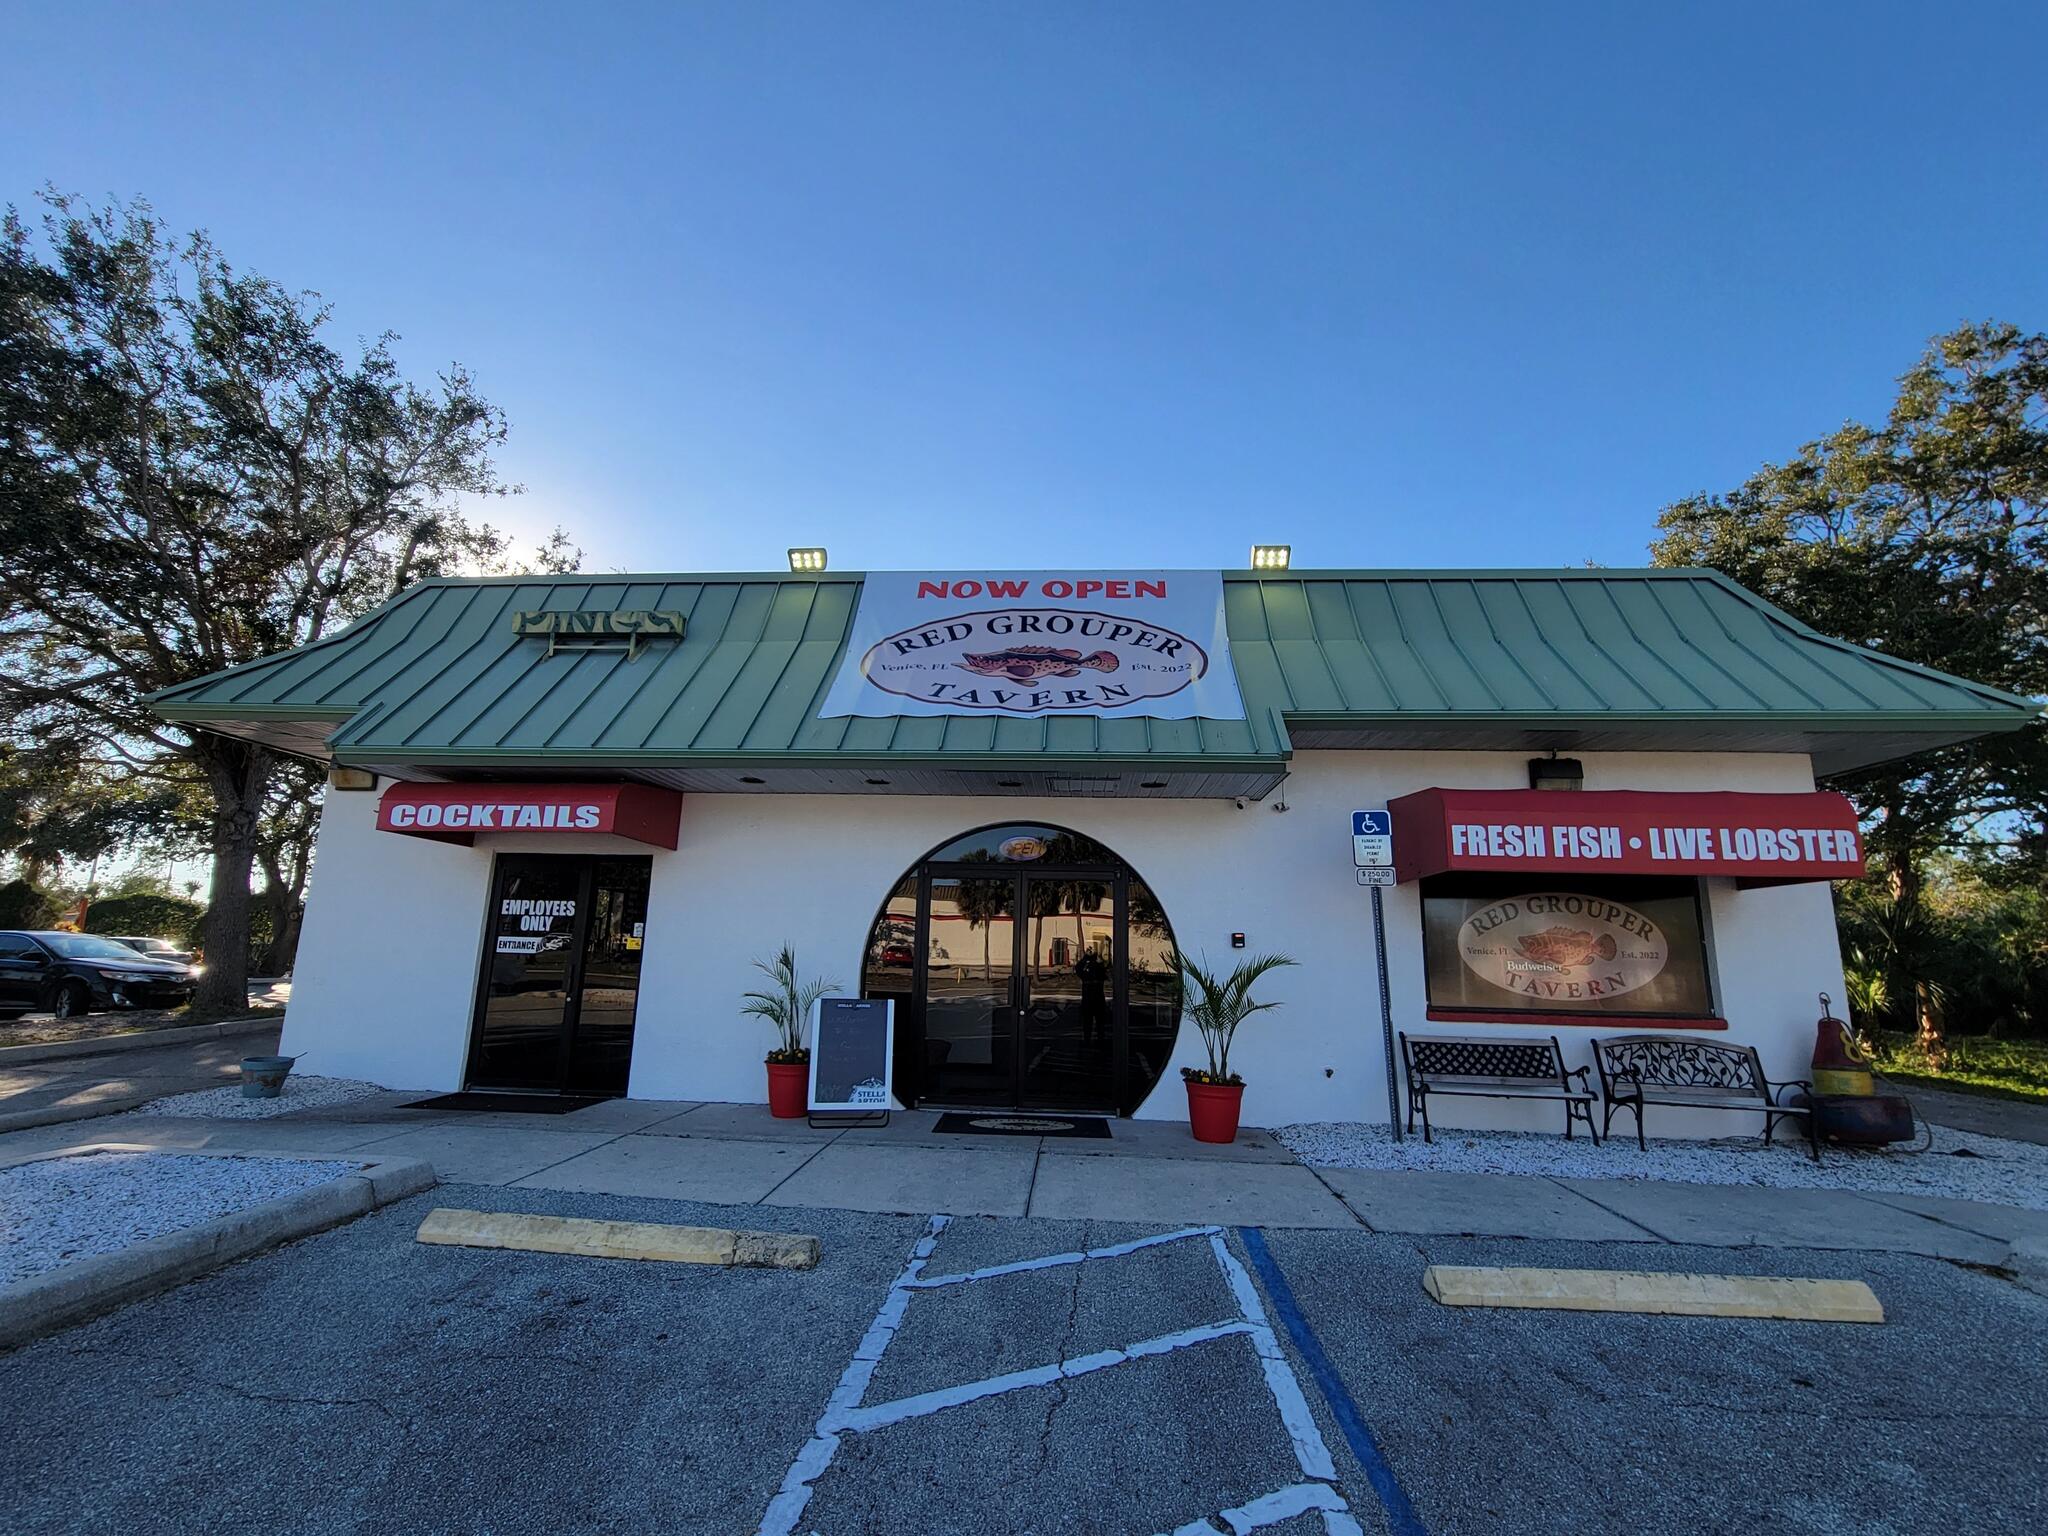 Red Grouper Tavern - Venice, FL - Nextdoor